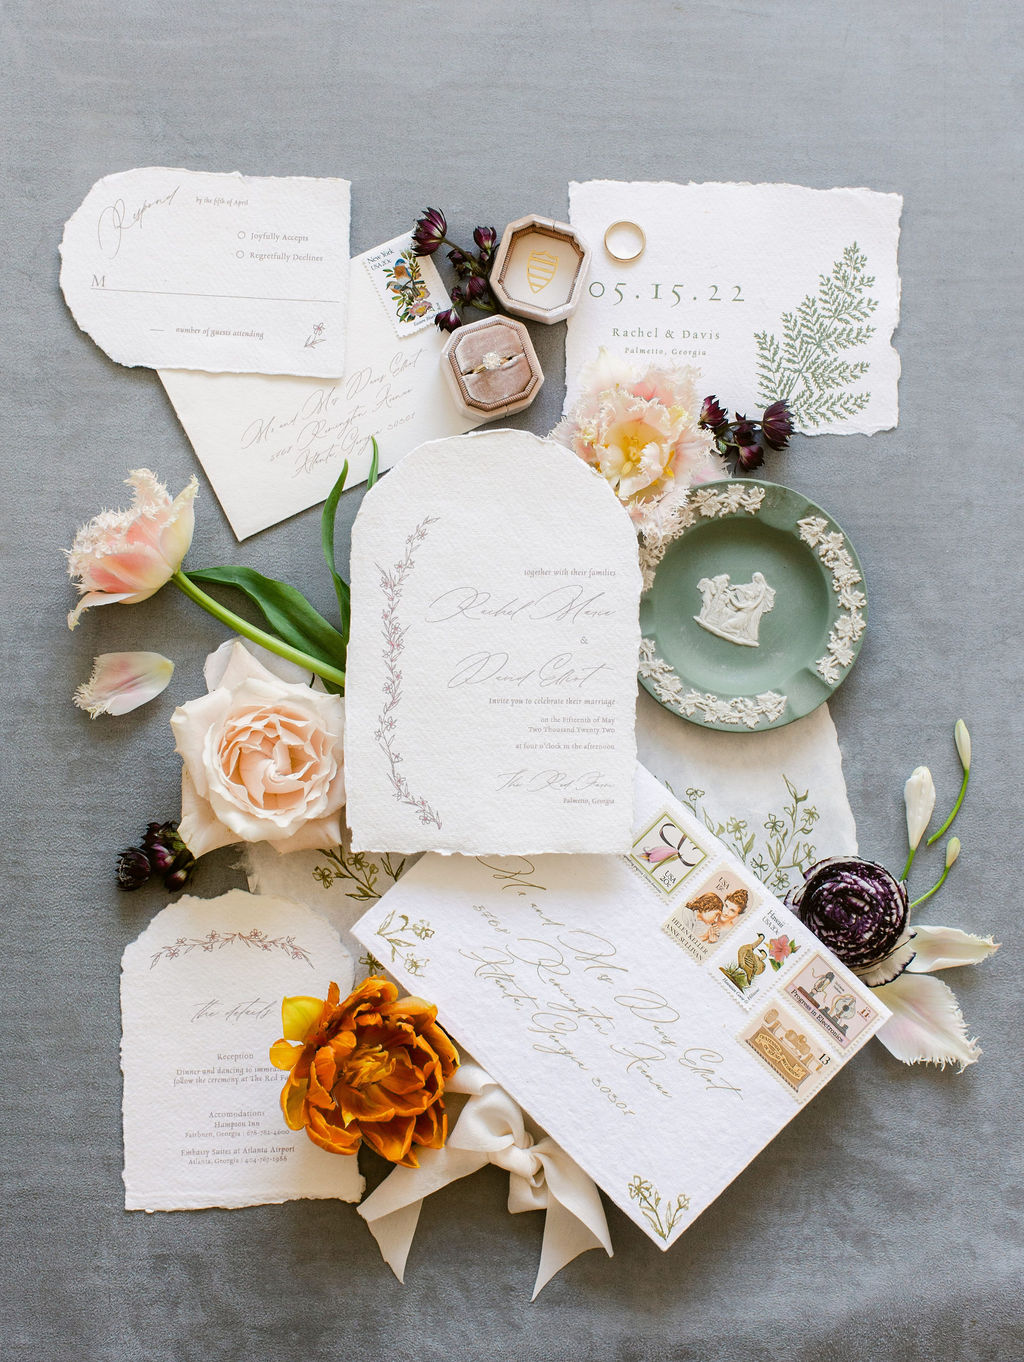 Romantic wedding invitations